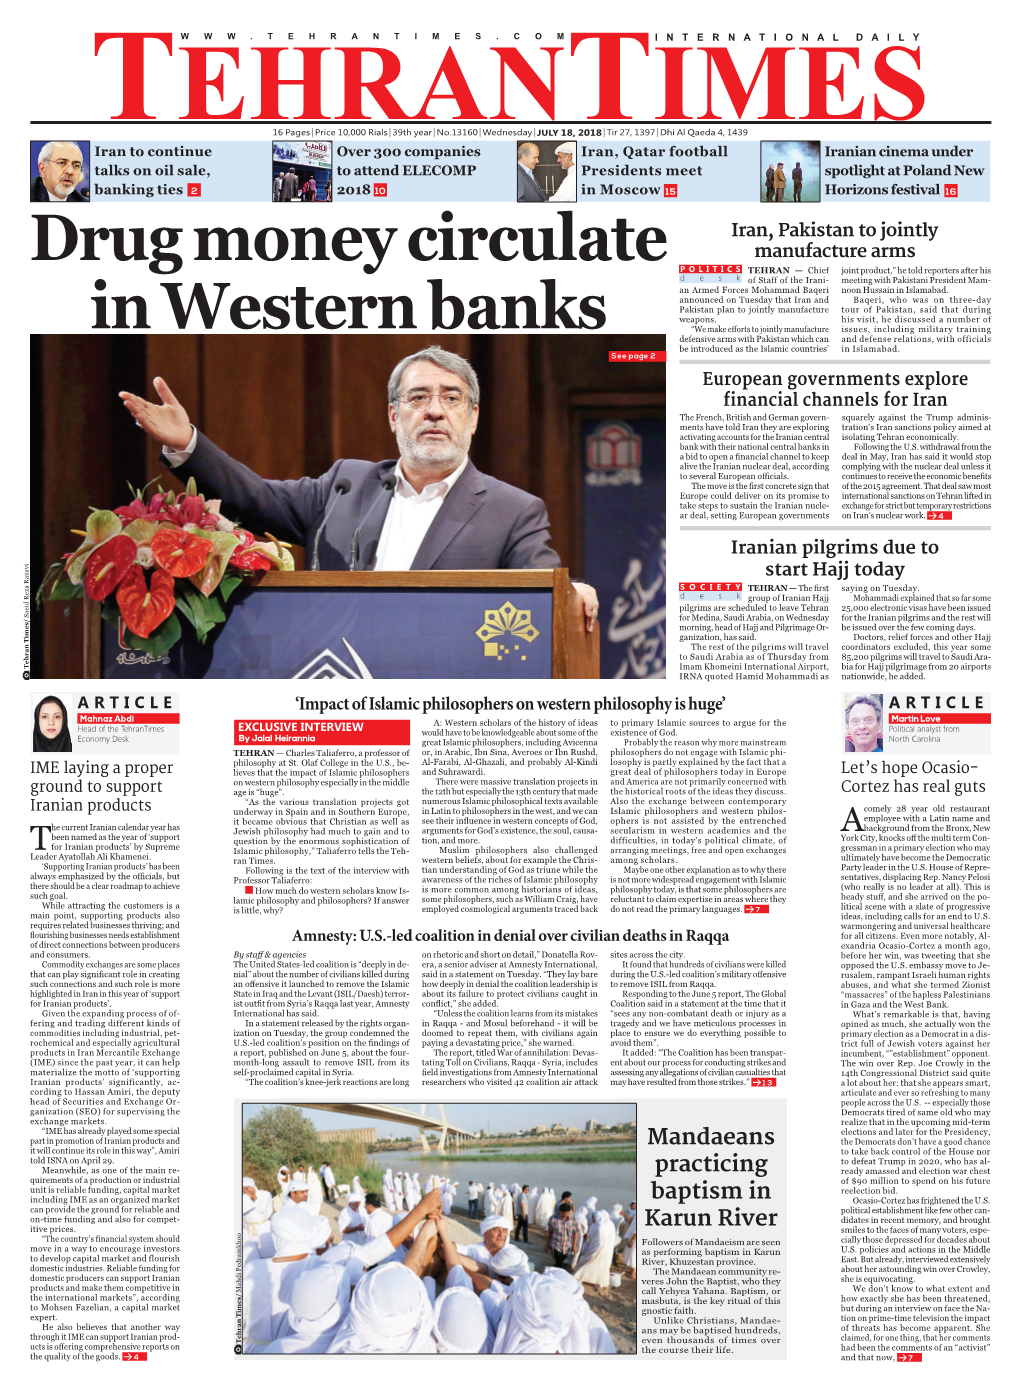 Drug Money Circulate in Western Banks